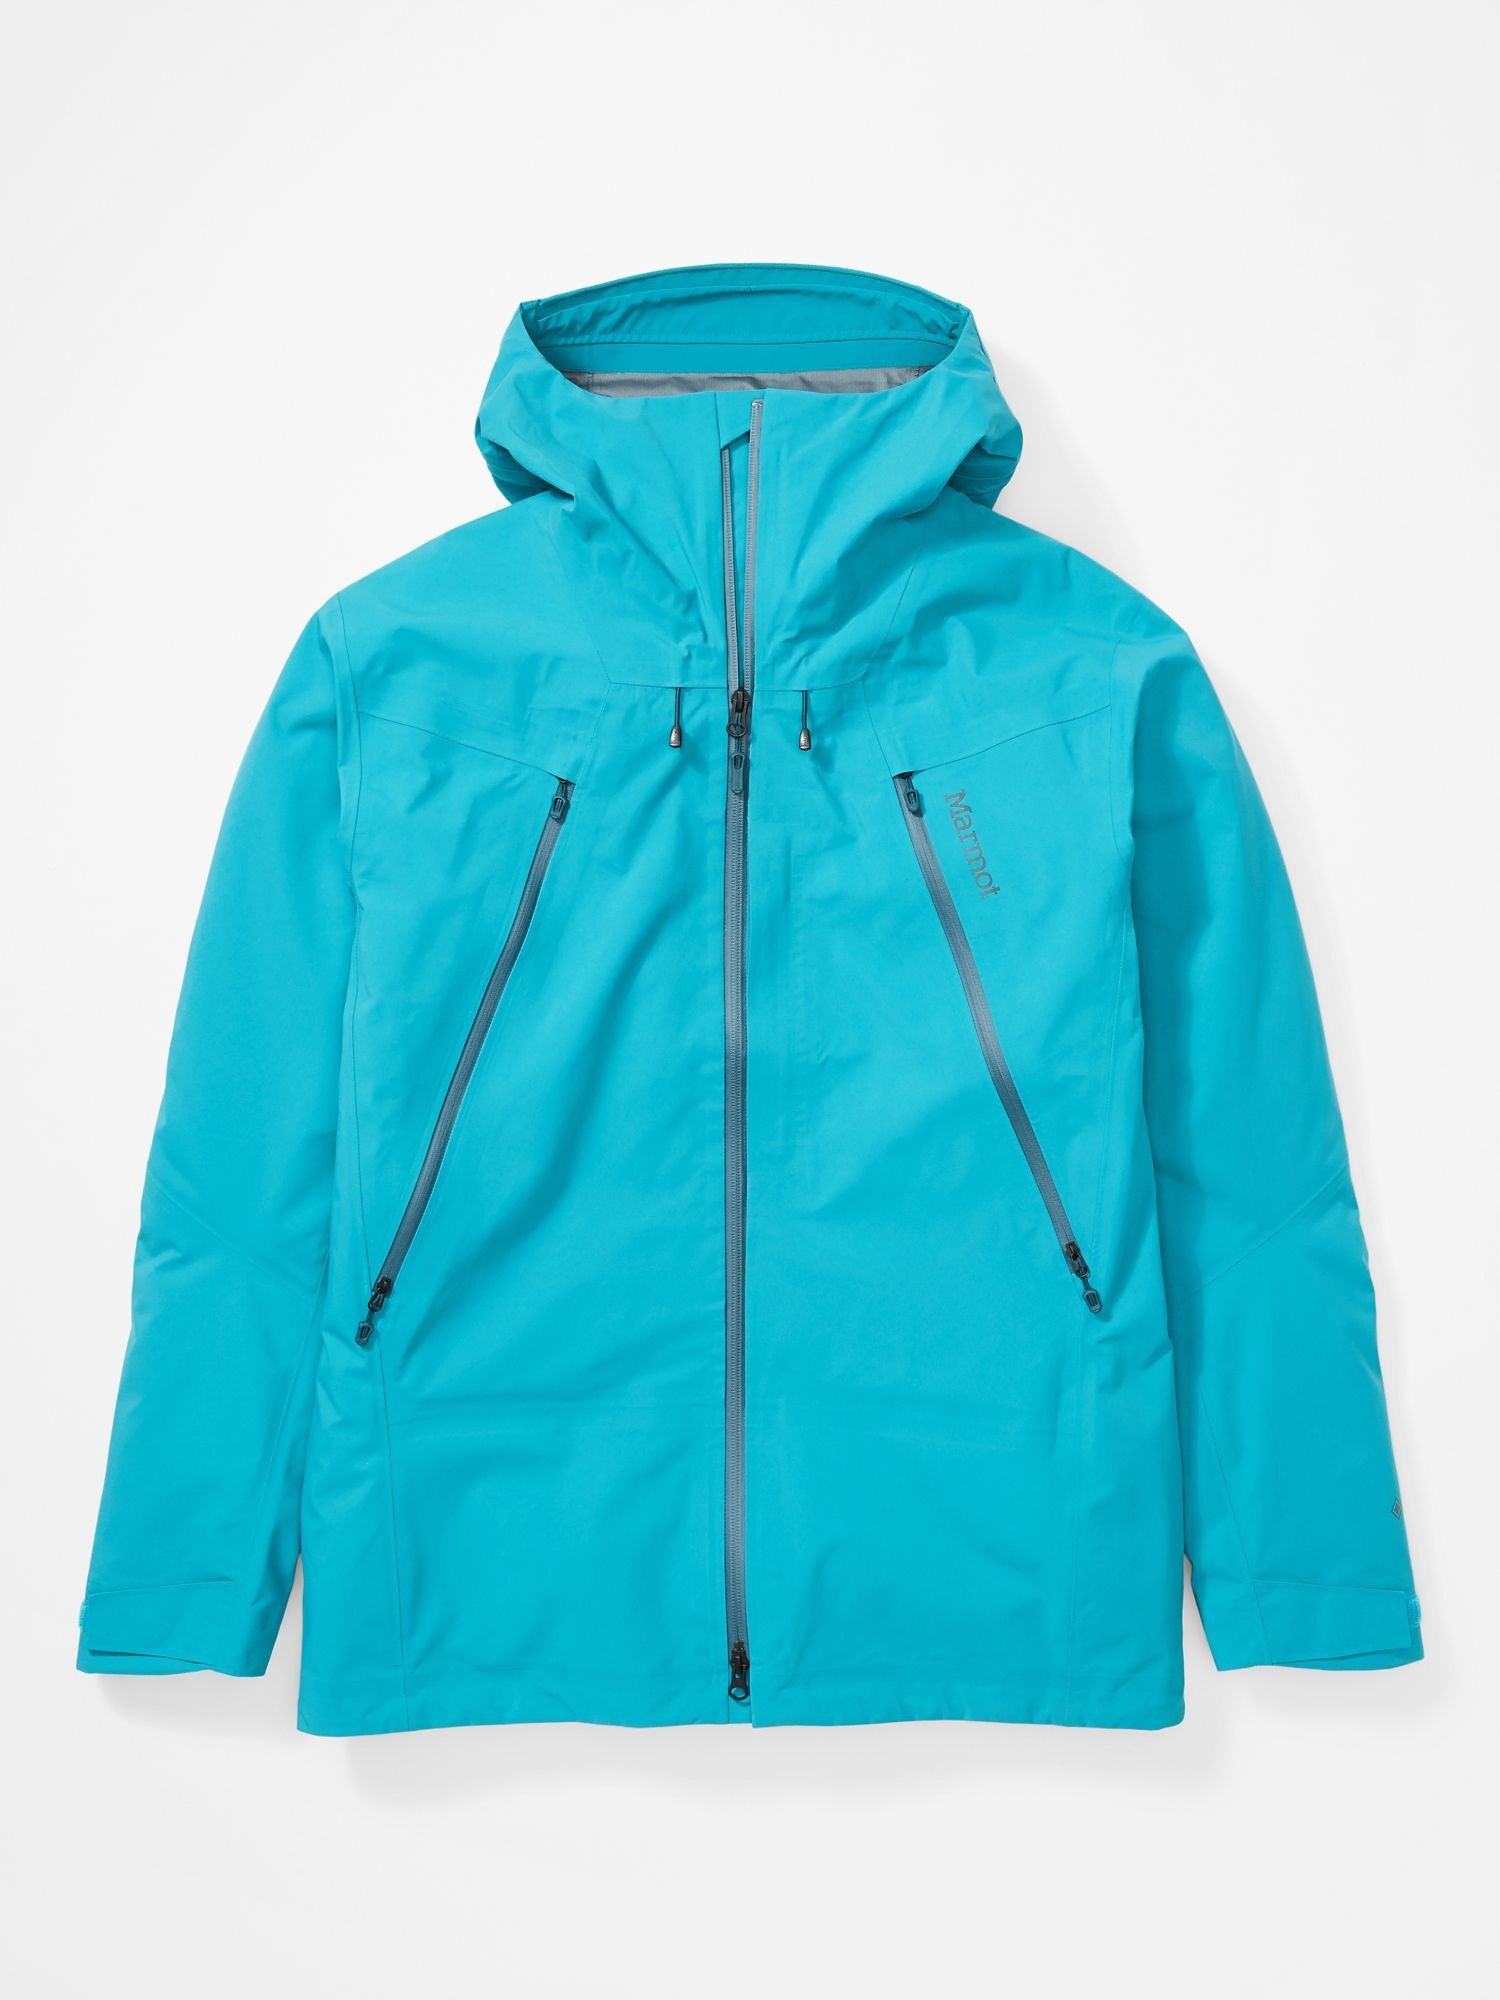 Marmot Alpinist Jacket - Waterproof jacket - Men's